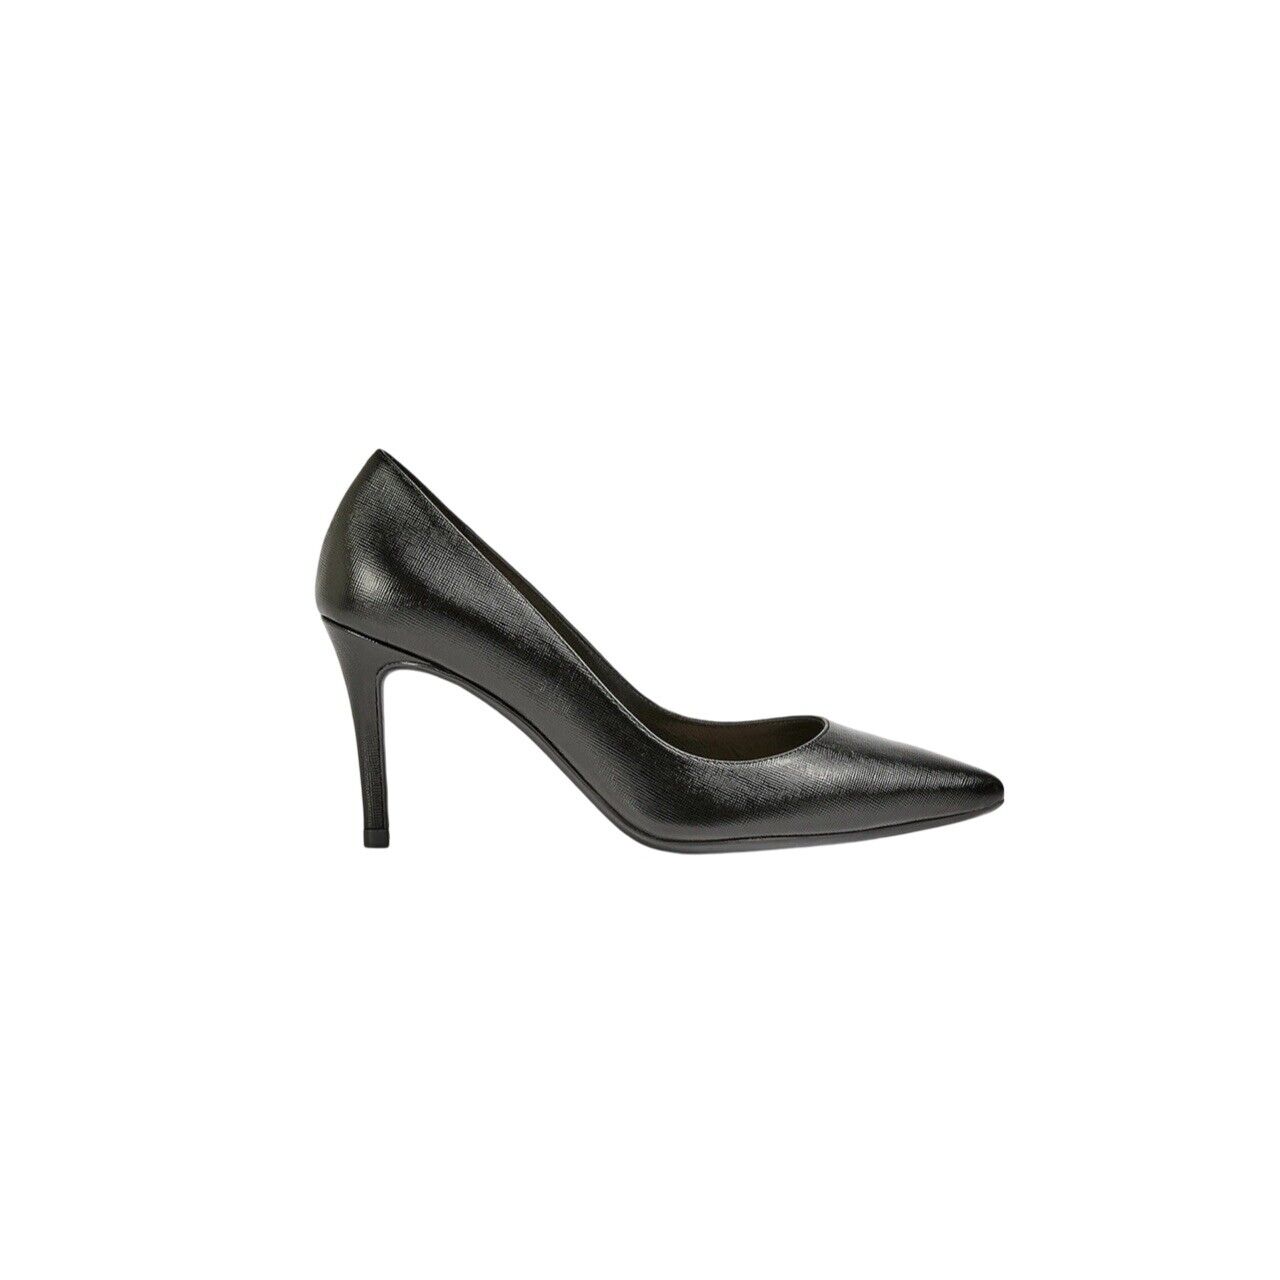 Ted Baker AlYSSE High Heels Court Black Shoes - RRP £125.00 - Soul and Sense Streetwear